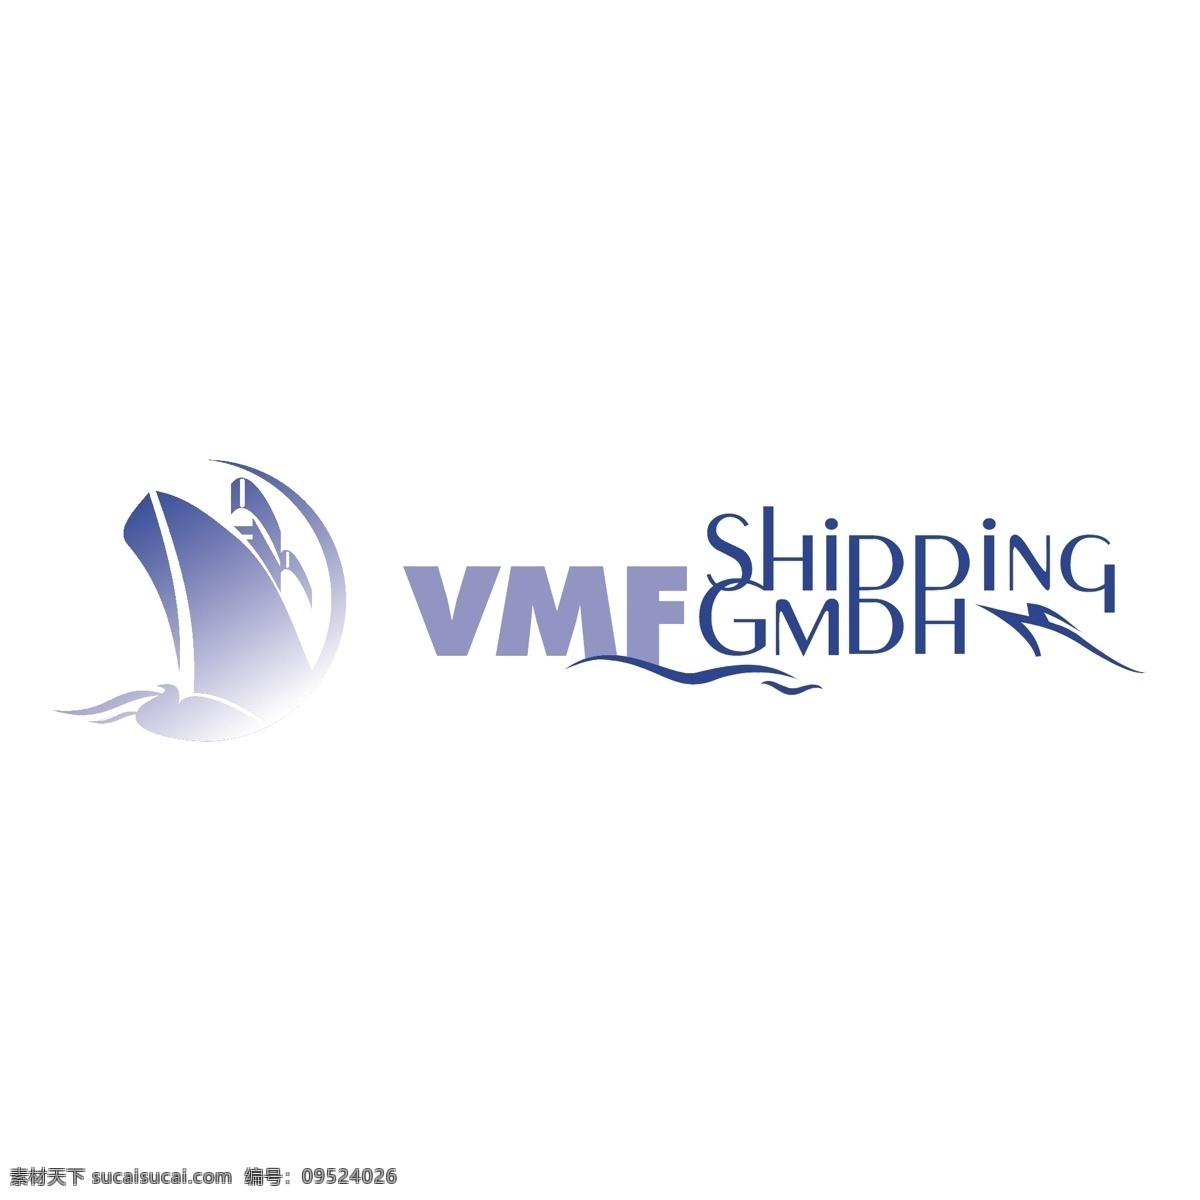 vmf 航运 有限公司 公司 免费矢量 vmf航运 航运公司 运输 载体 艺术 自由 免费矢量图形 矢量 图形 船舶设计 船舶 艺术载体 免费送货 建筑家居